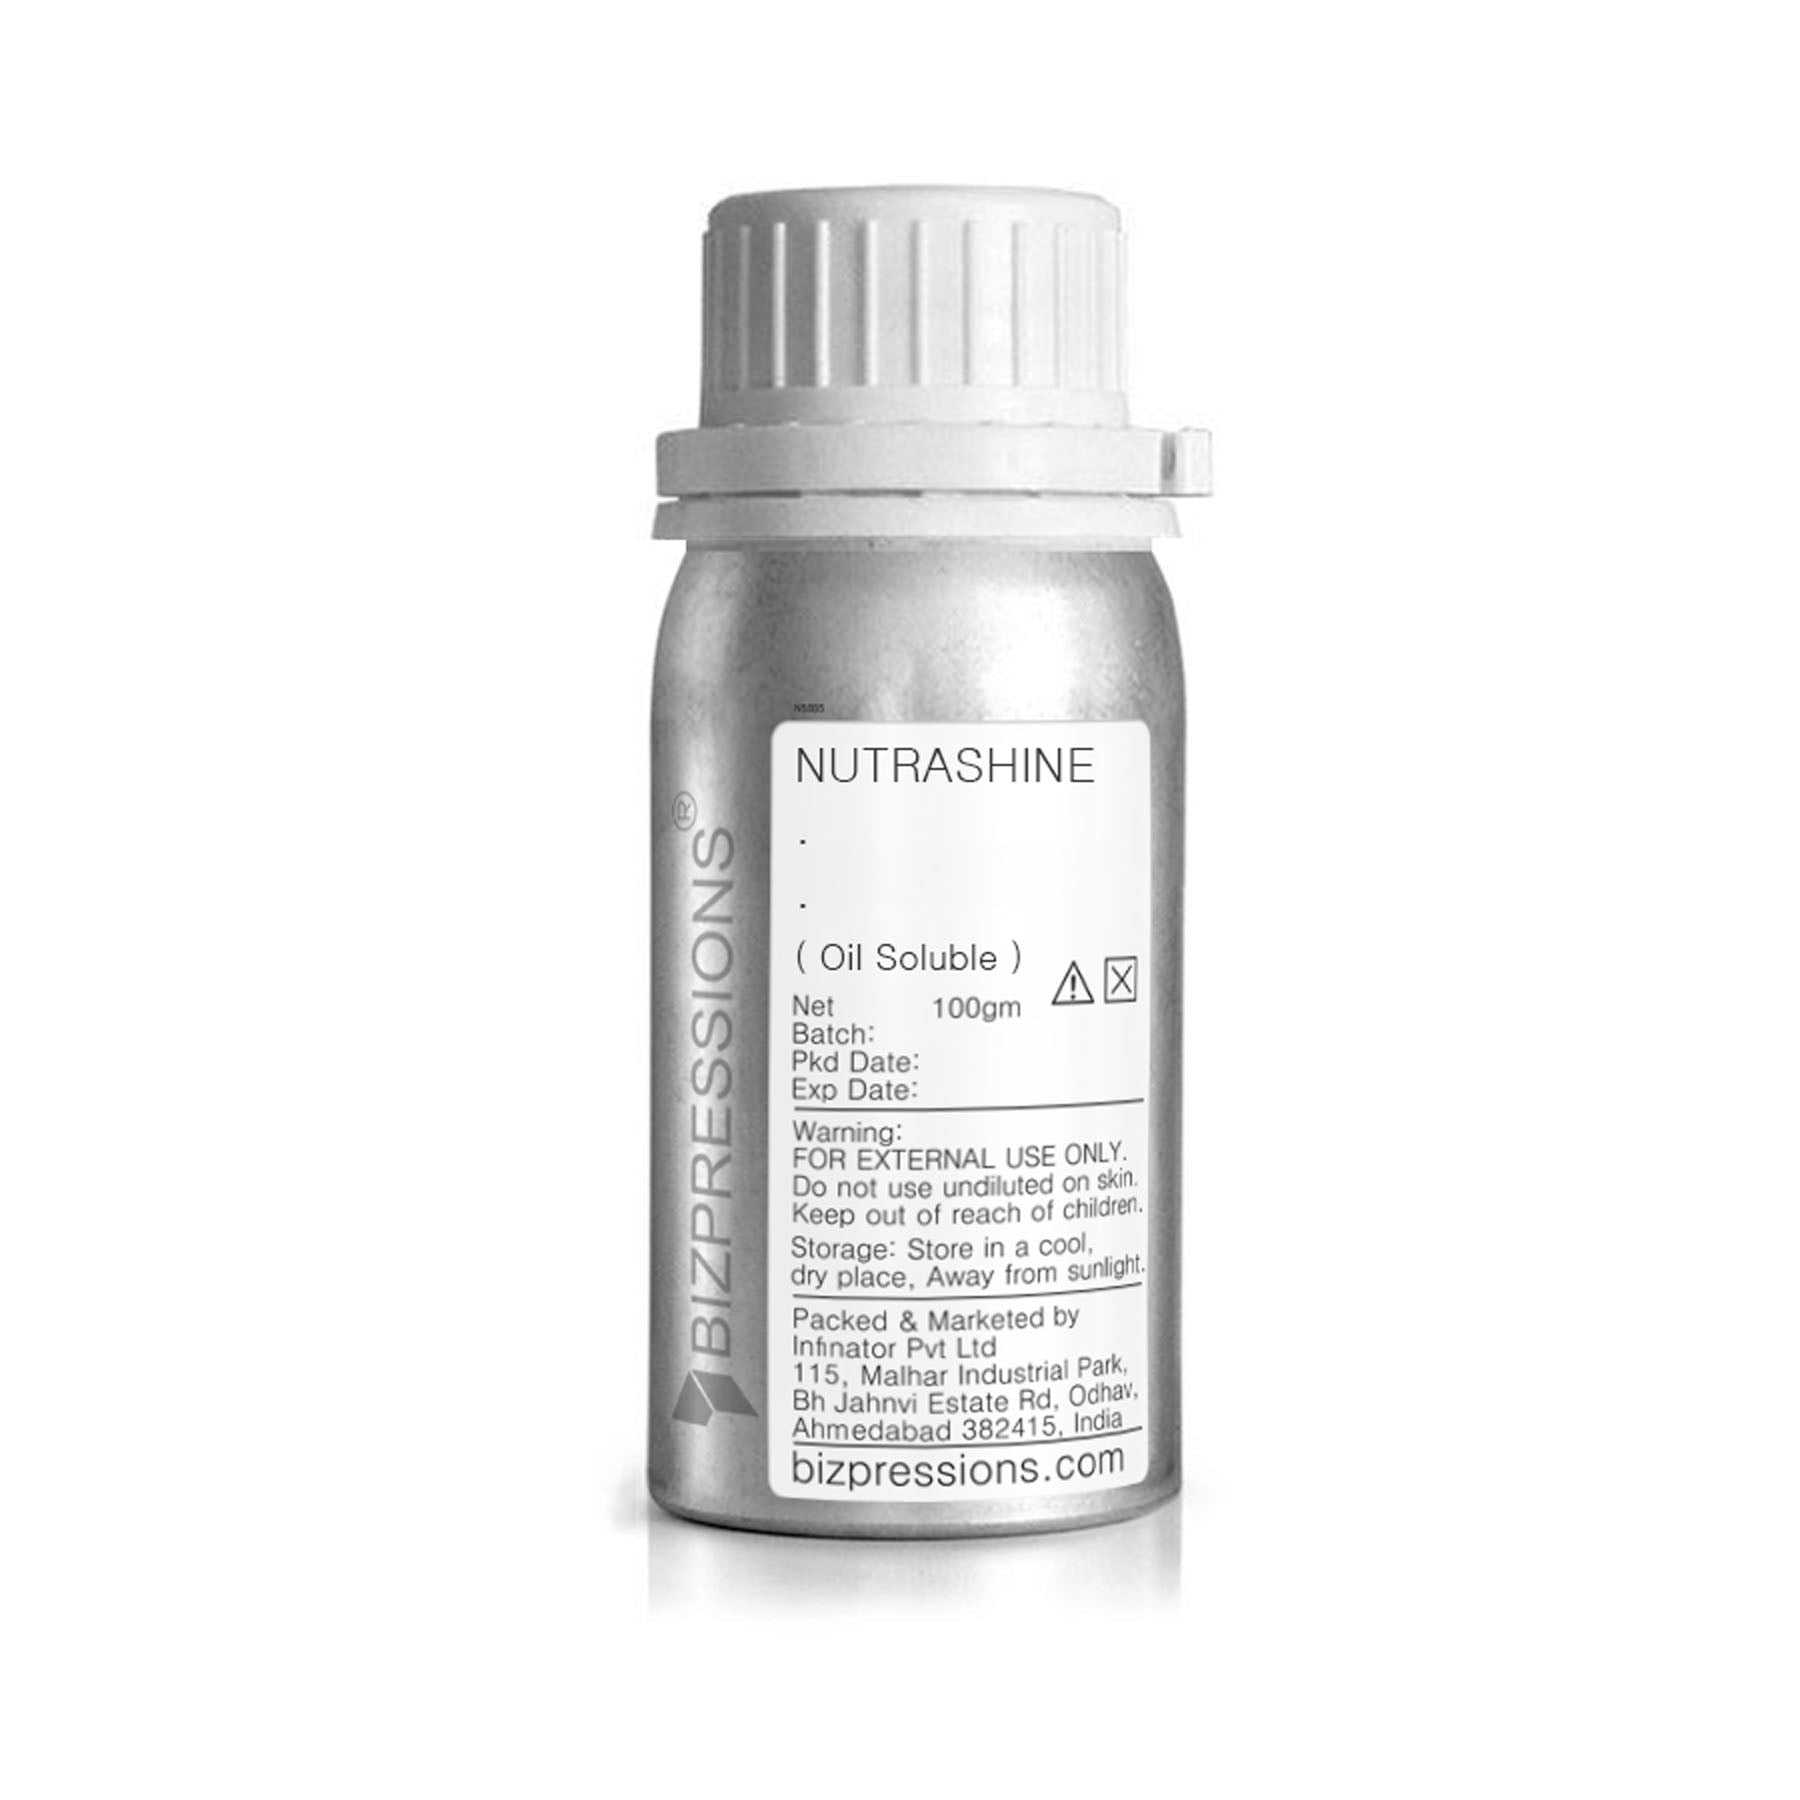 NUTRASHINE - Fragrance ( Oil Soluble ) - 100 gm